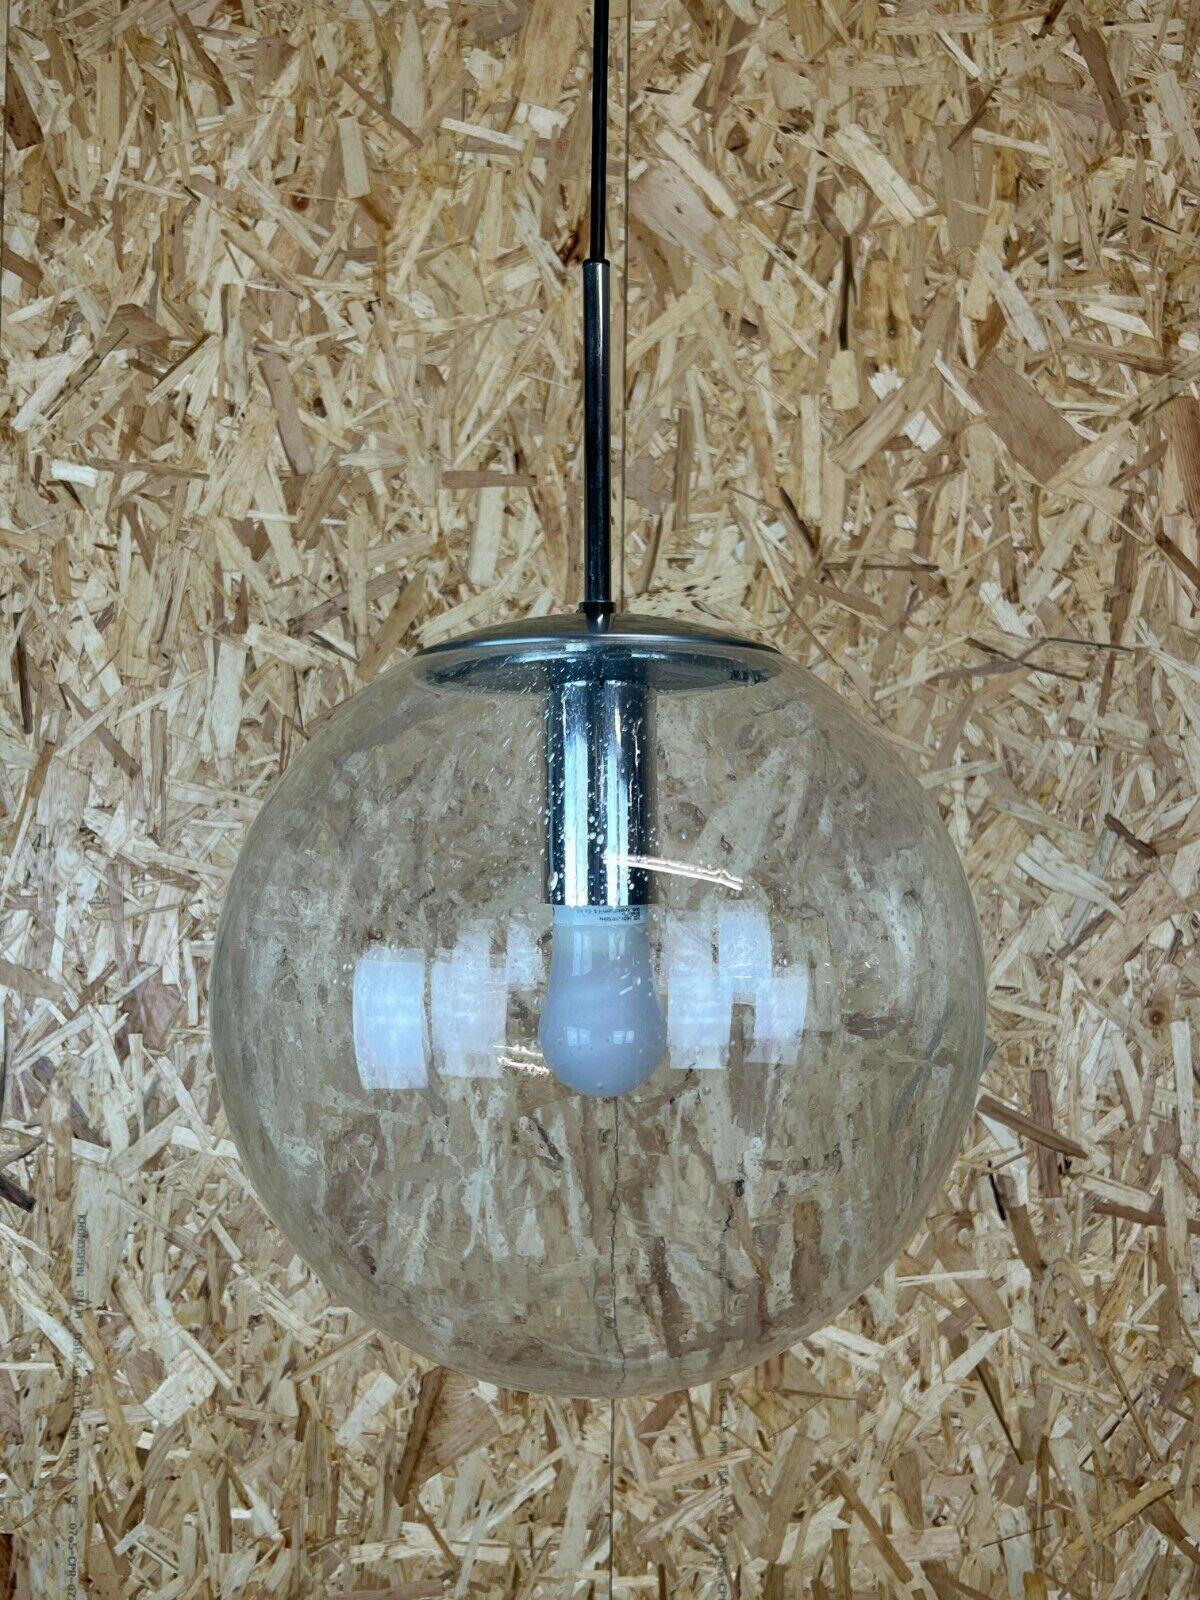 XL 60s 70s lamp light ceiling lamp Limburg spherical lamp Ball Design 60s

Object: ceiling lamp

Manufacturer: Glashütte Limburg

Condition: good

Age: around 1960-1970

Dimensions:

Diameter = 35cm
Hanging height = 118cm

Other